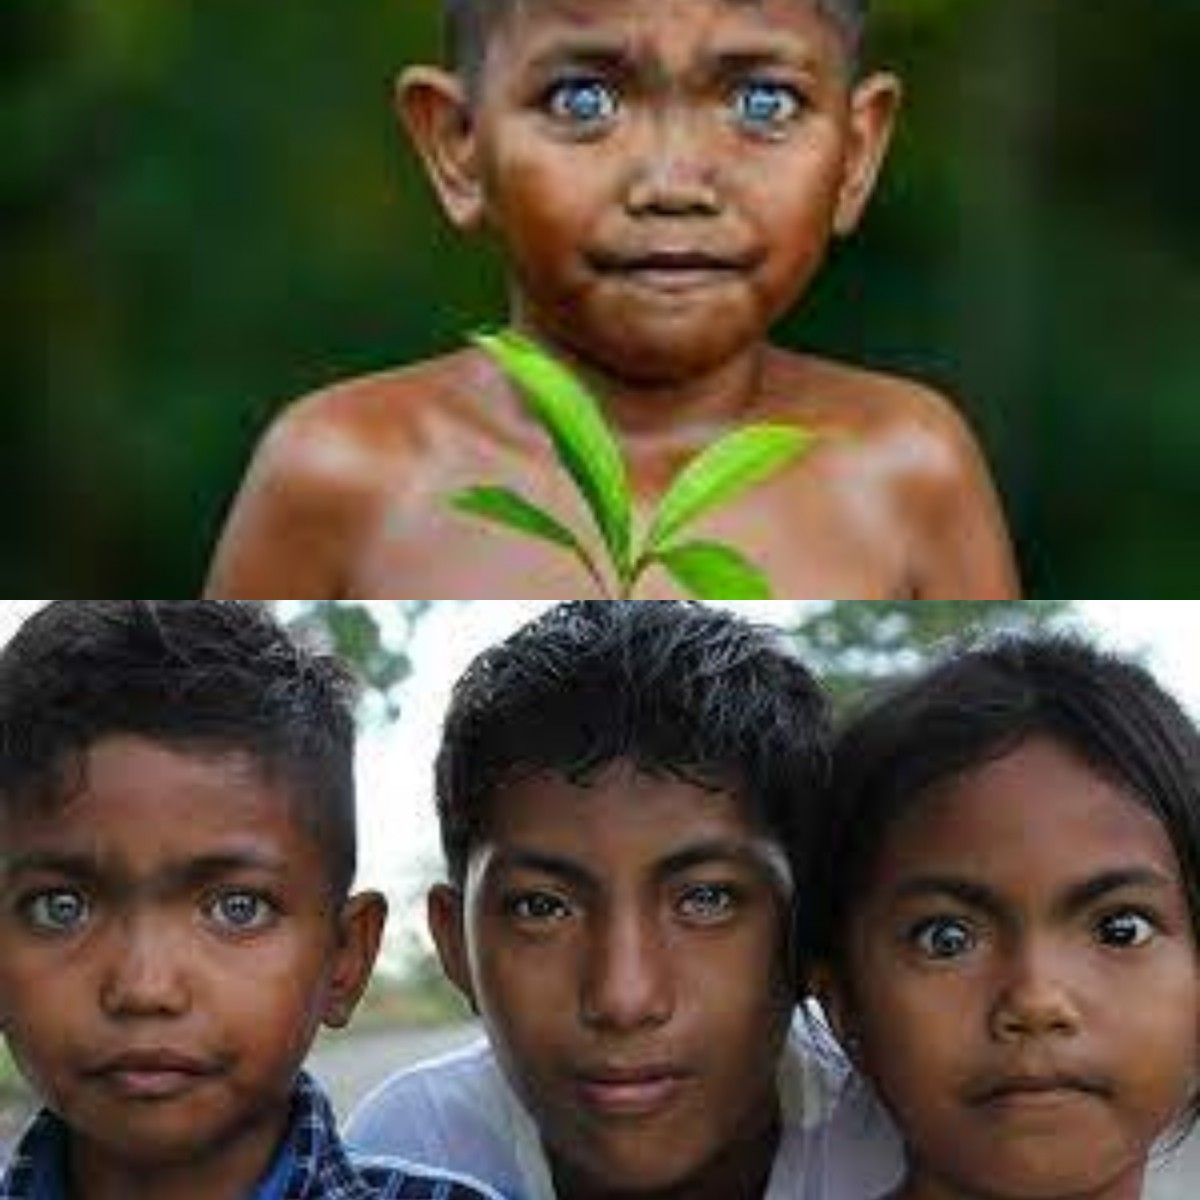 Fakta Menarik! Inilah 3 Suku di Indonesia dengan Keunikan Mata Birunya Mirip Orang Eropa 